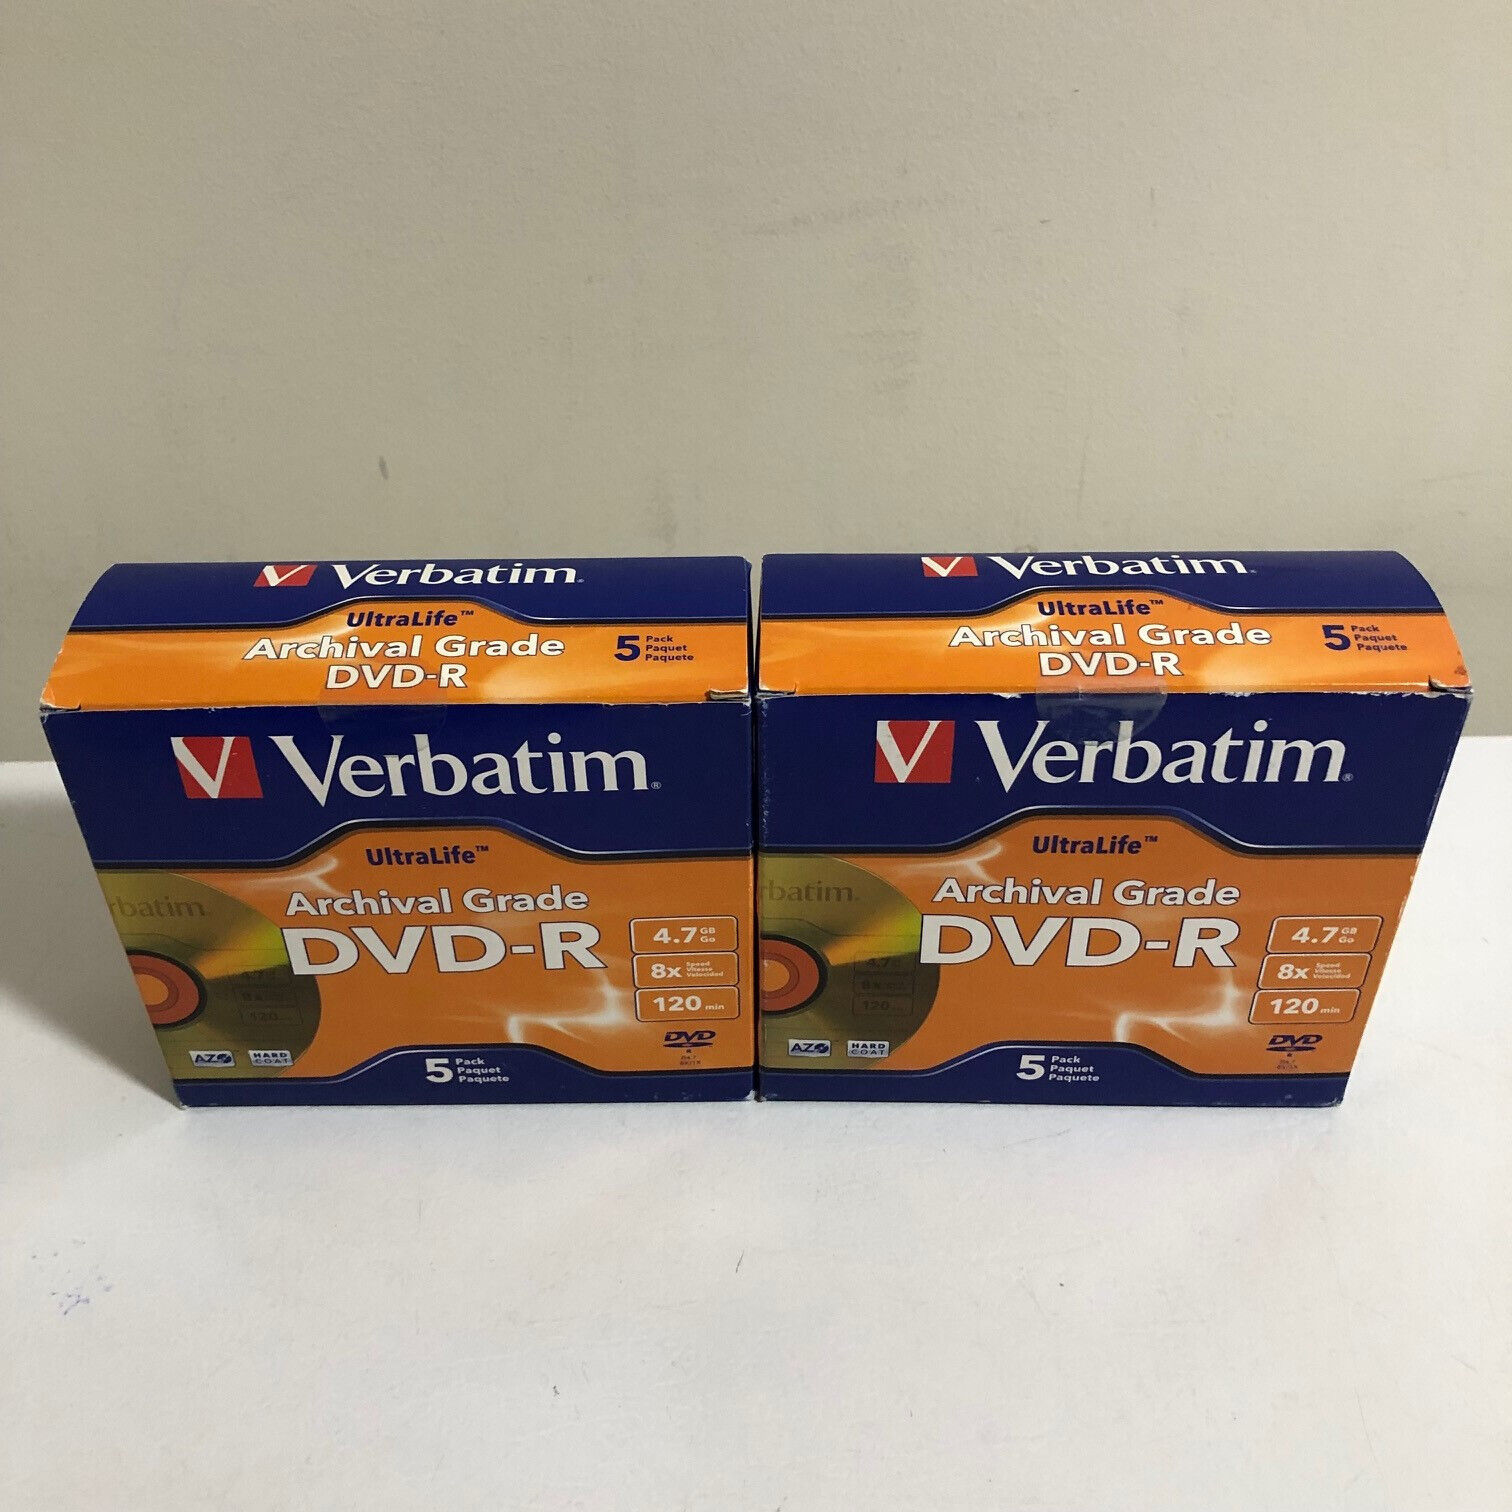 Verbatim DVD-R UltraLife Archival Grade 10 Pack (2x5 pack) - New Sealed